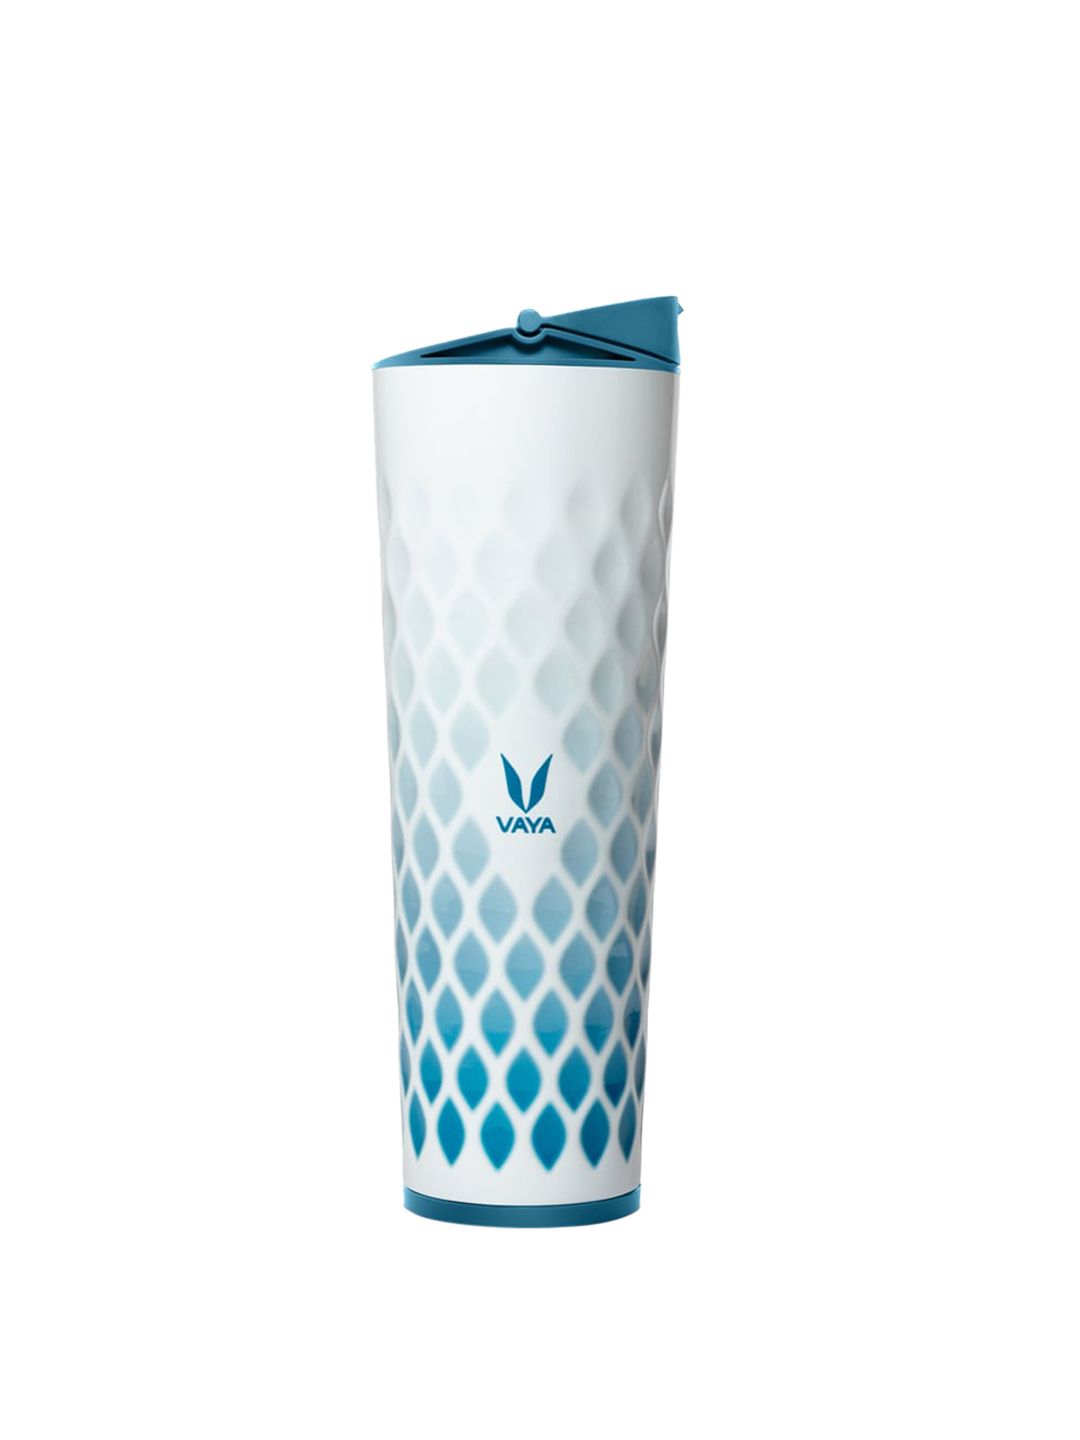 Vaya Unisex Blue Printed Sipper Lid Vacuum Insulated Water Bottle 600ml Price in India